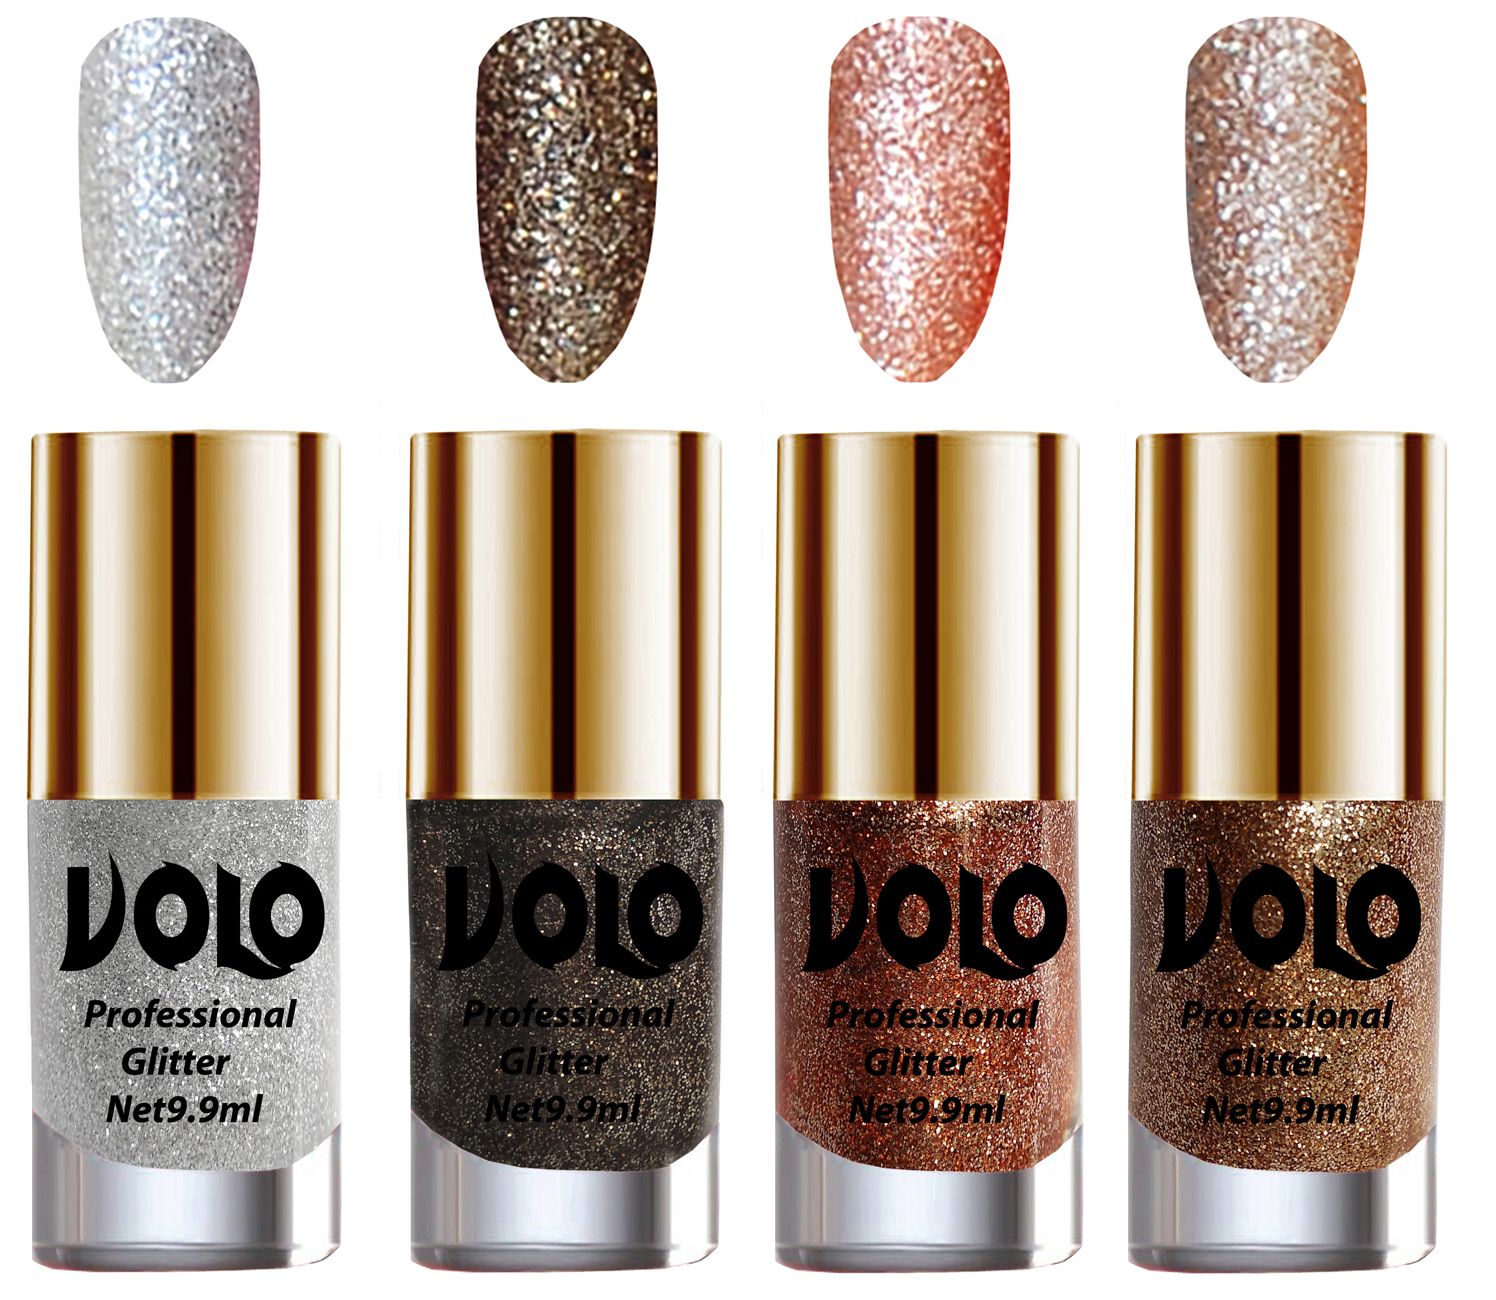     			VOLO Professionally Used Glitter Shine Nail Polish Silver,Grey,Peach Gold Pack of 4 39 mL